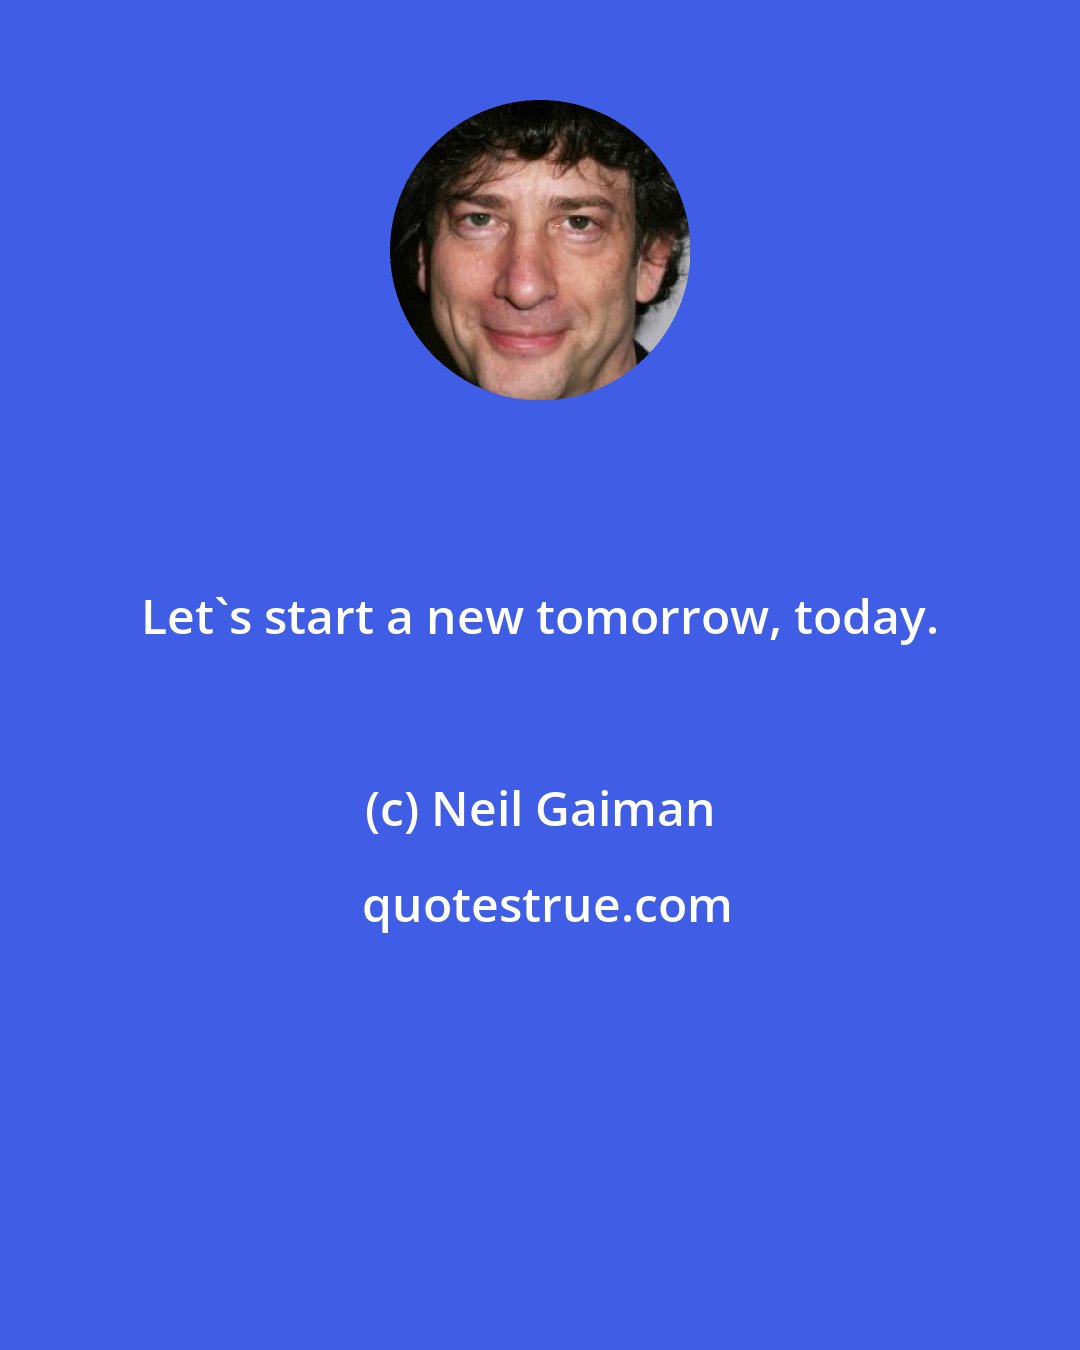 Neil Gaiman: Let's start a new tomorrow, today.